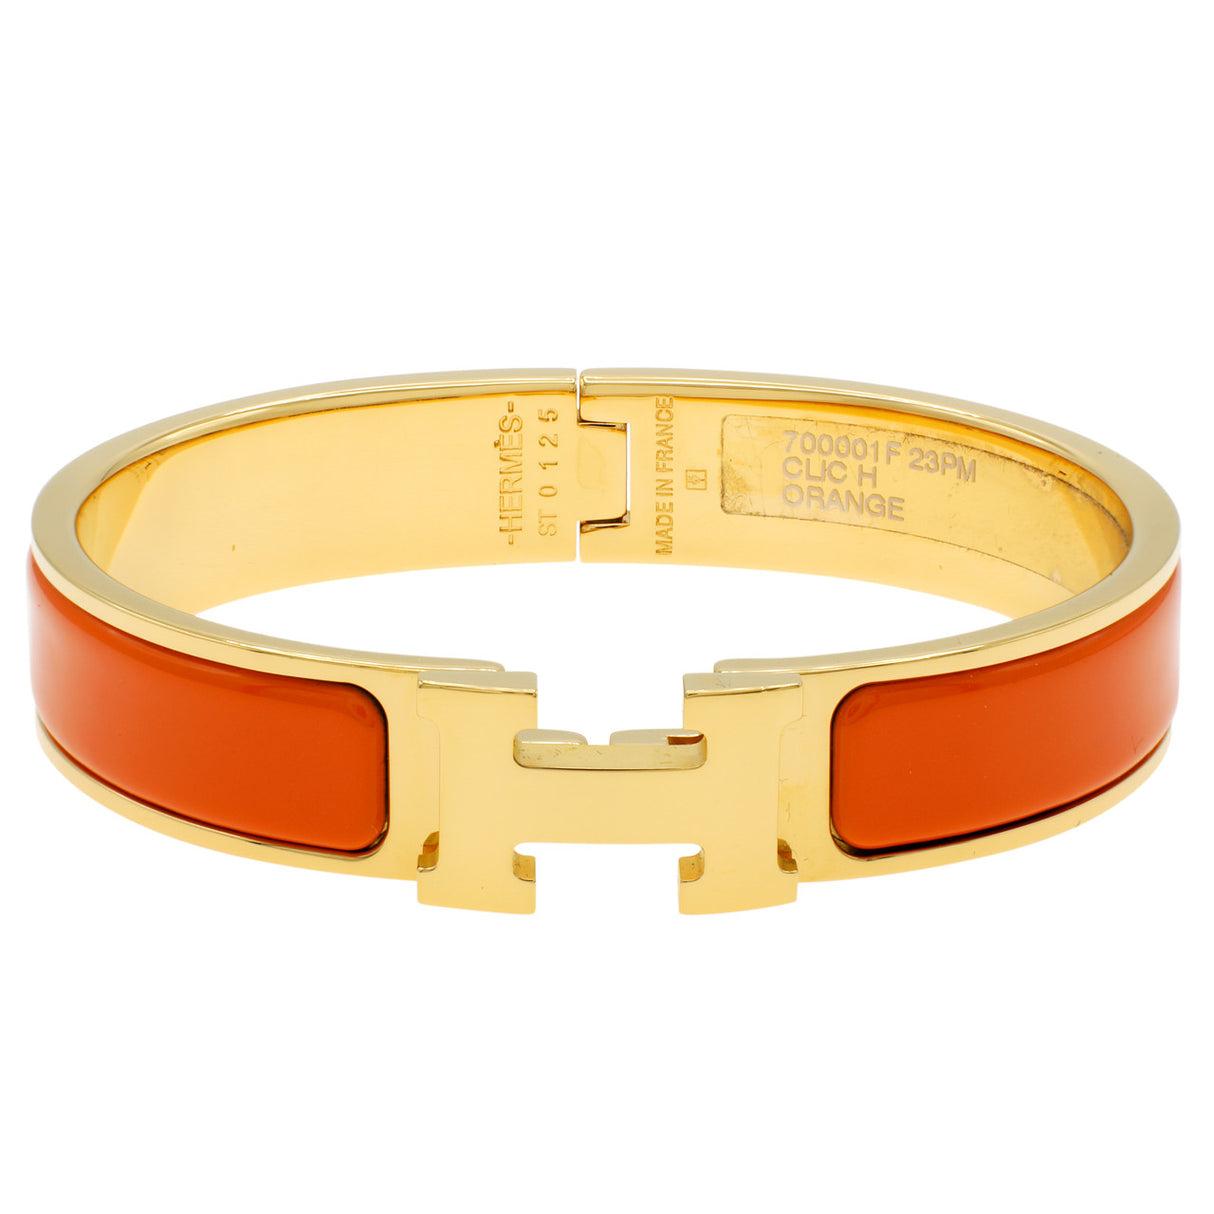 Hermes Orange Enamel  Clic  H  Bracelet